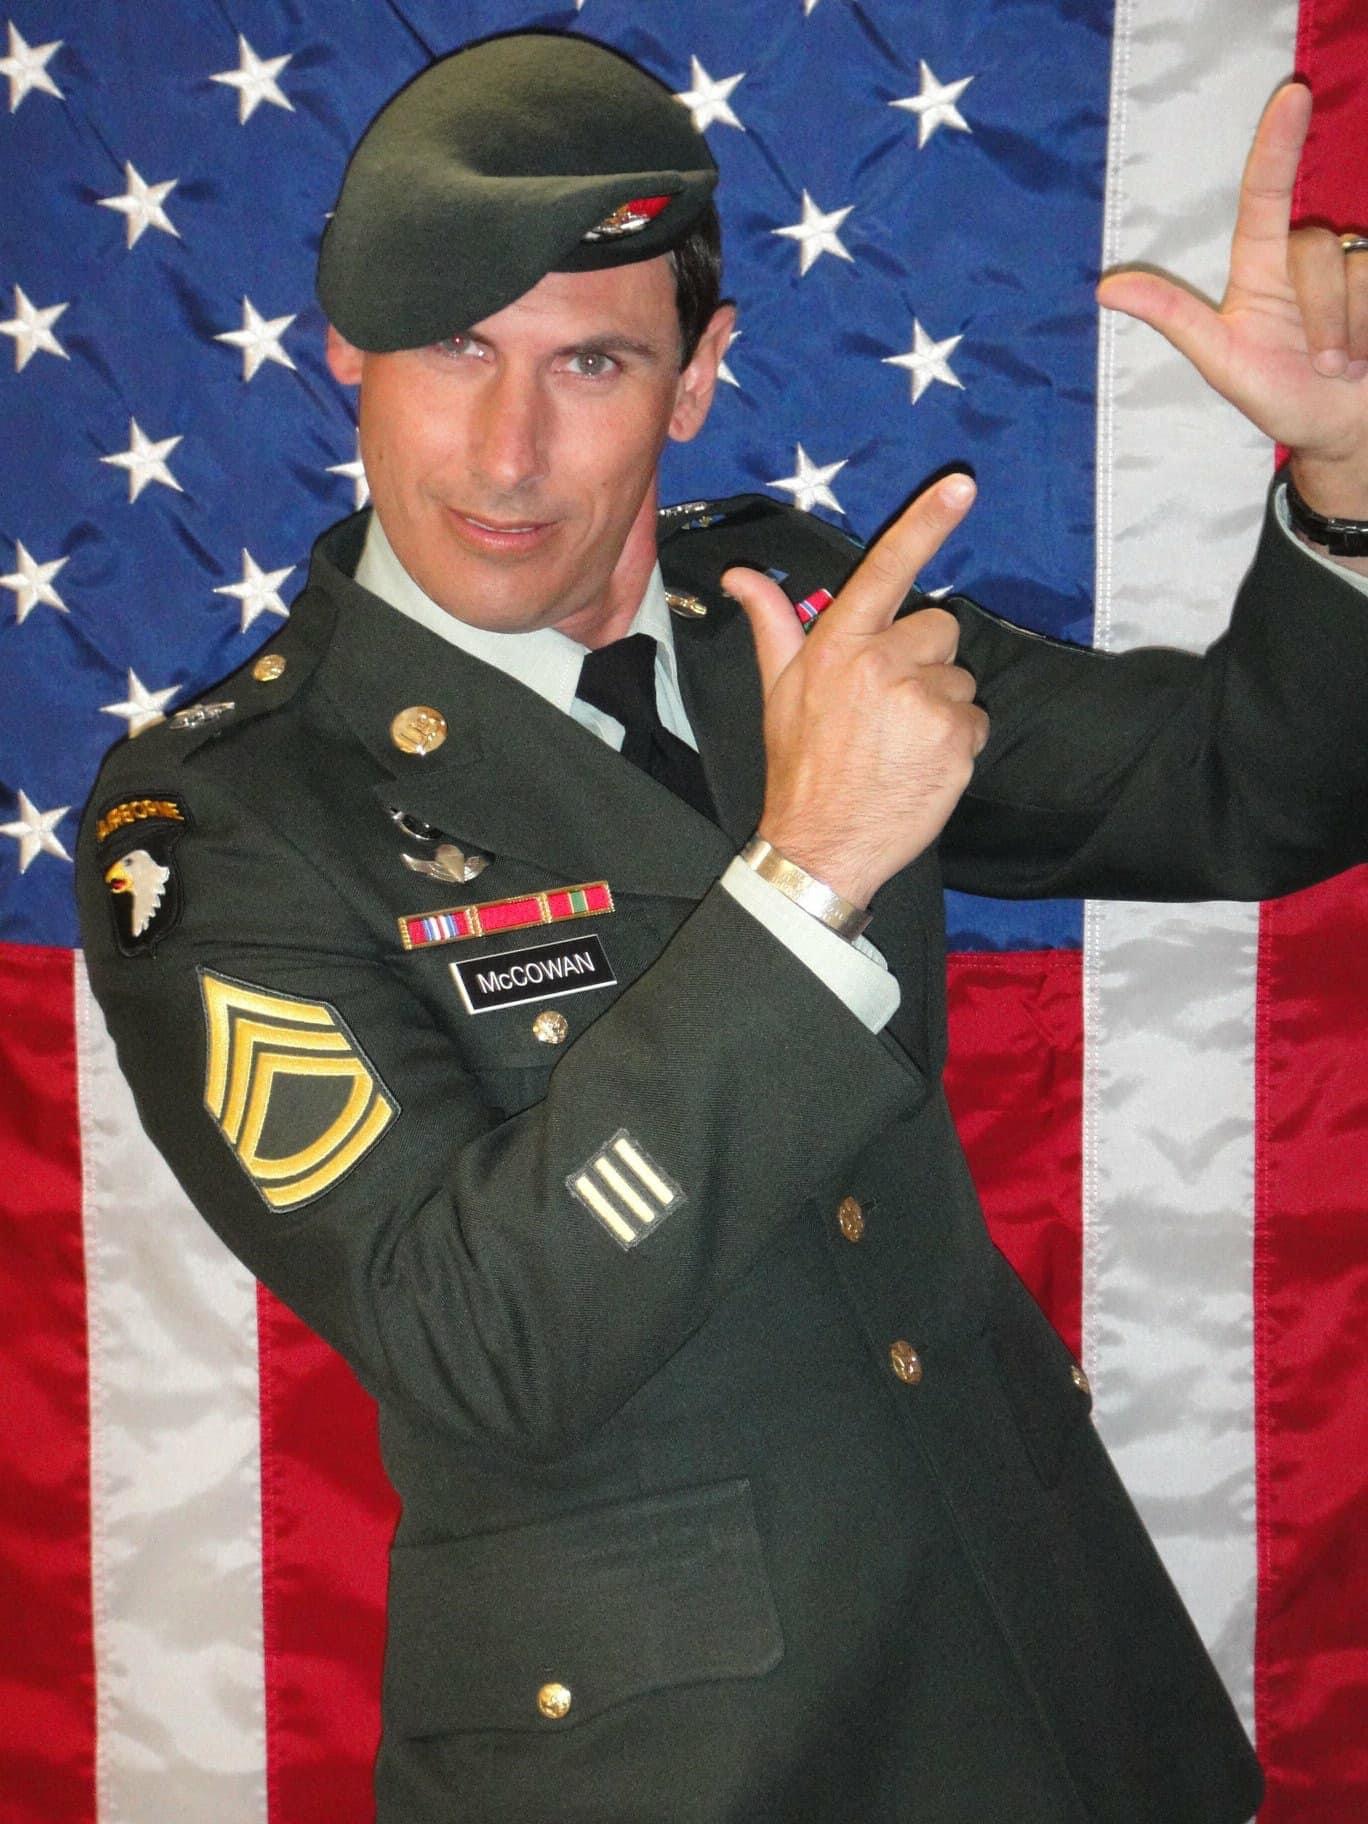 Mark McCowan, E8 Master Sergeant, U.S Army